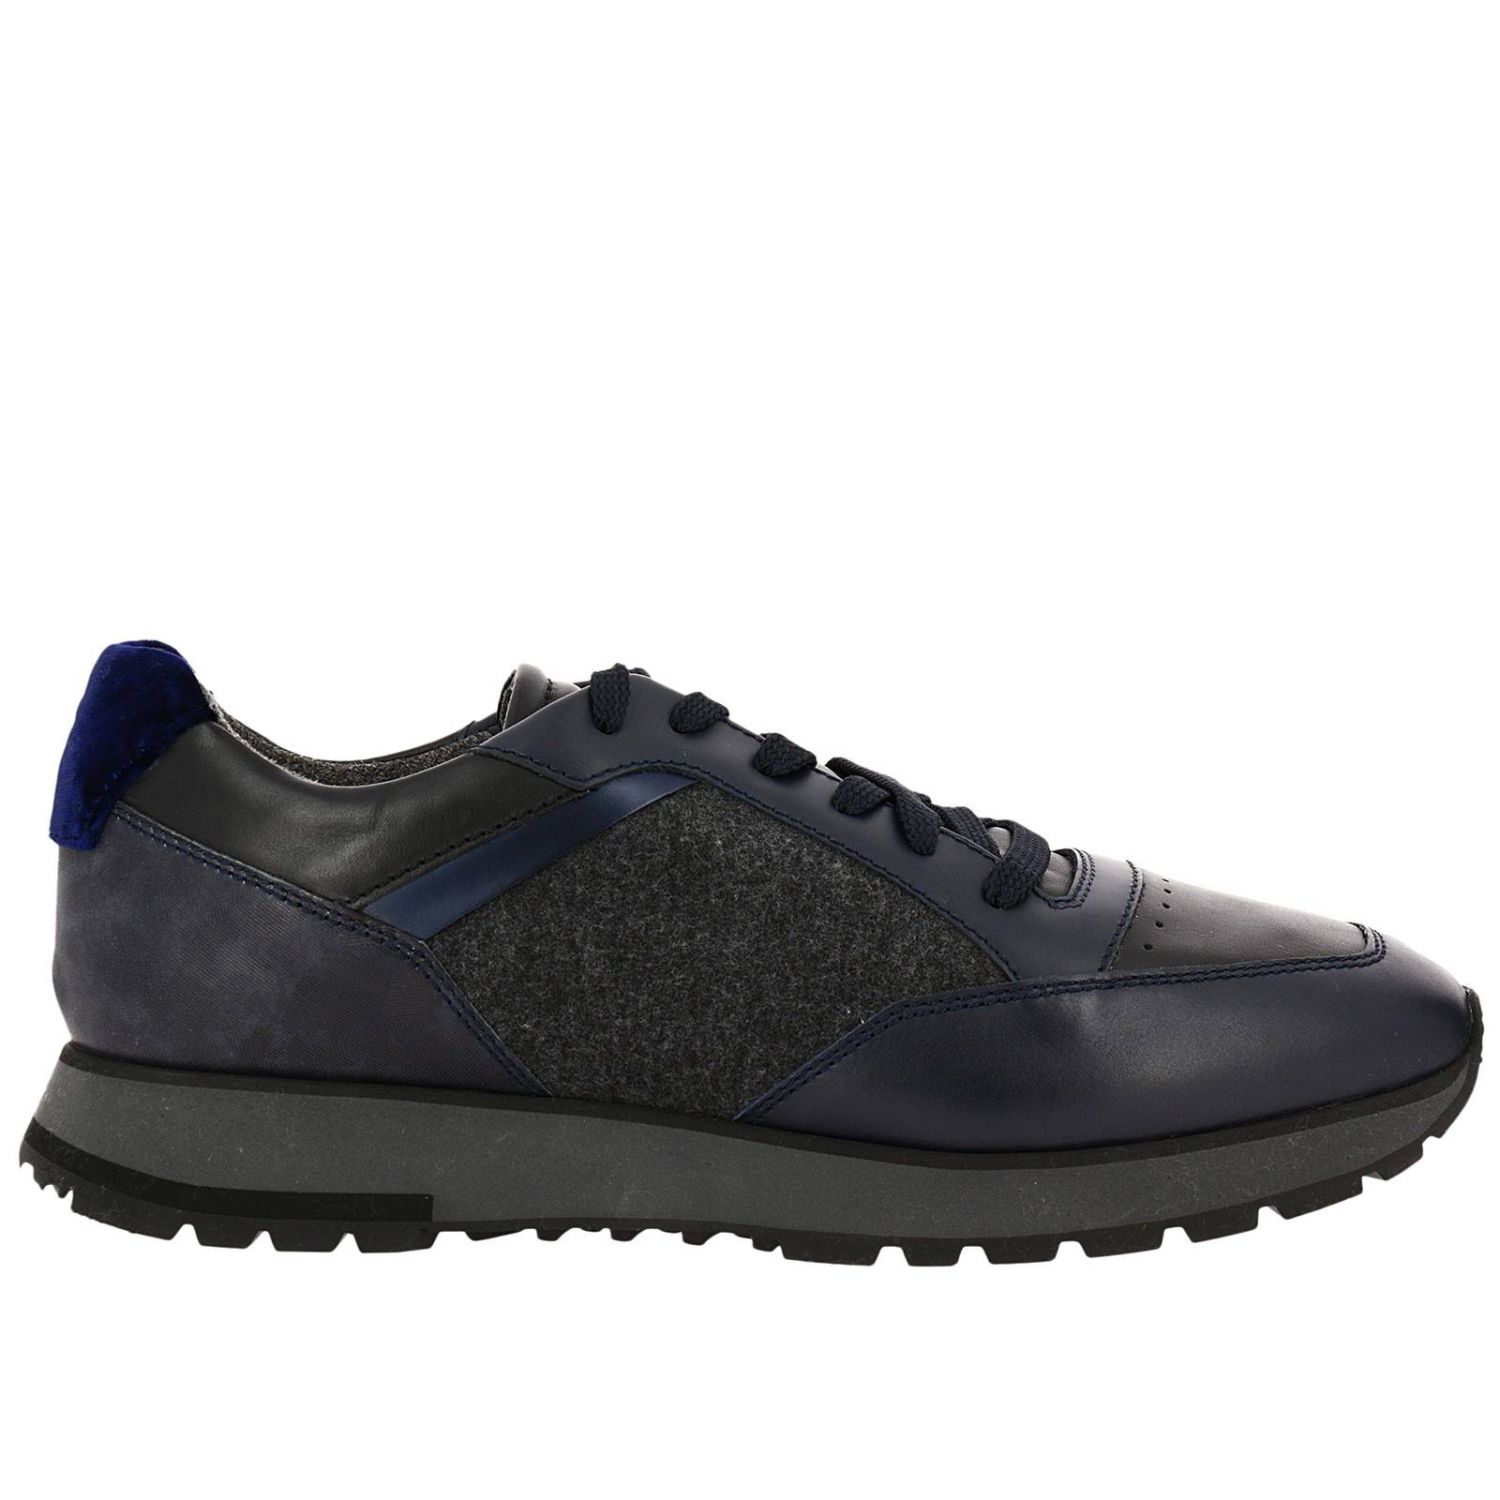 Santoni Outlet: Shoes men | Sneakers Santoni Men Fa03 | Sneakers ...